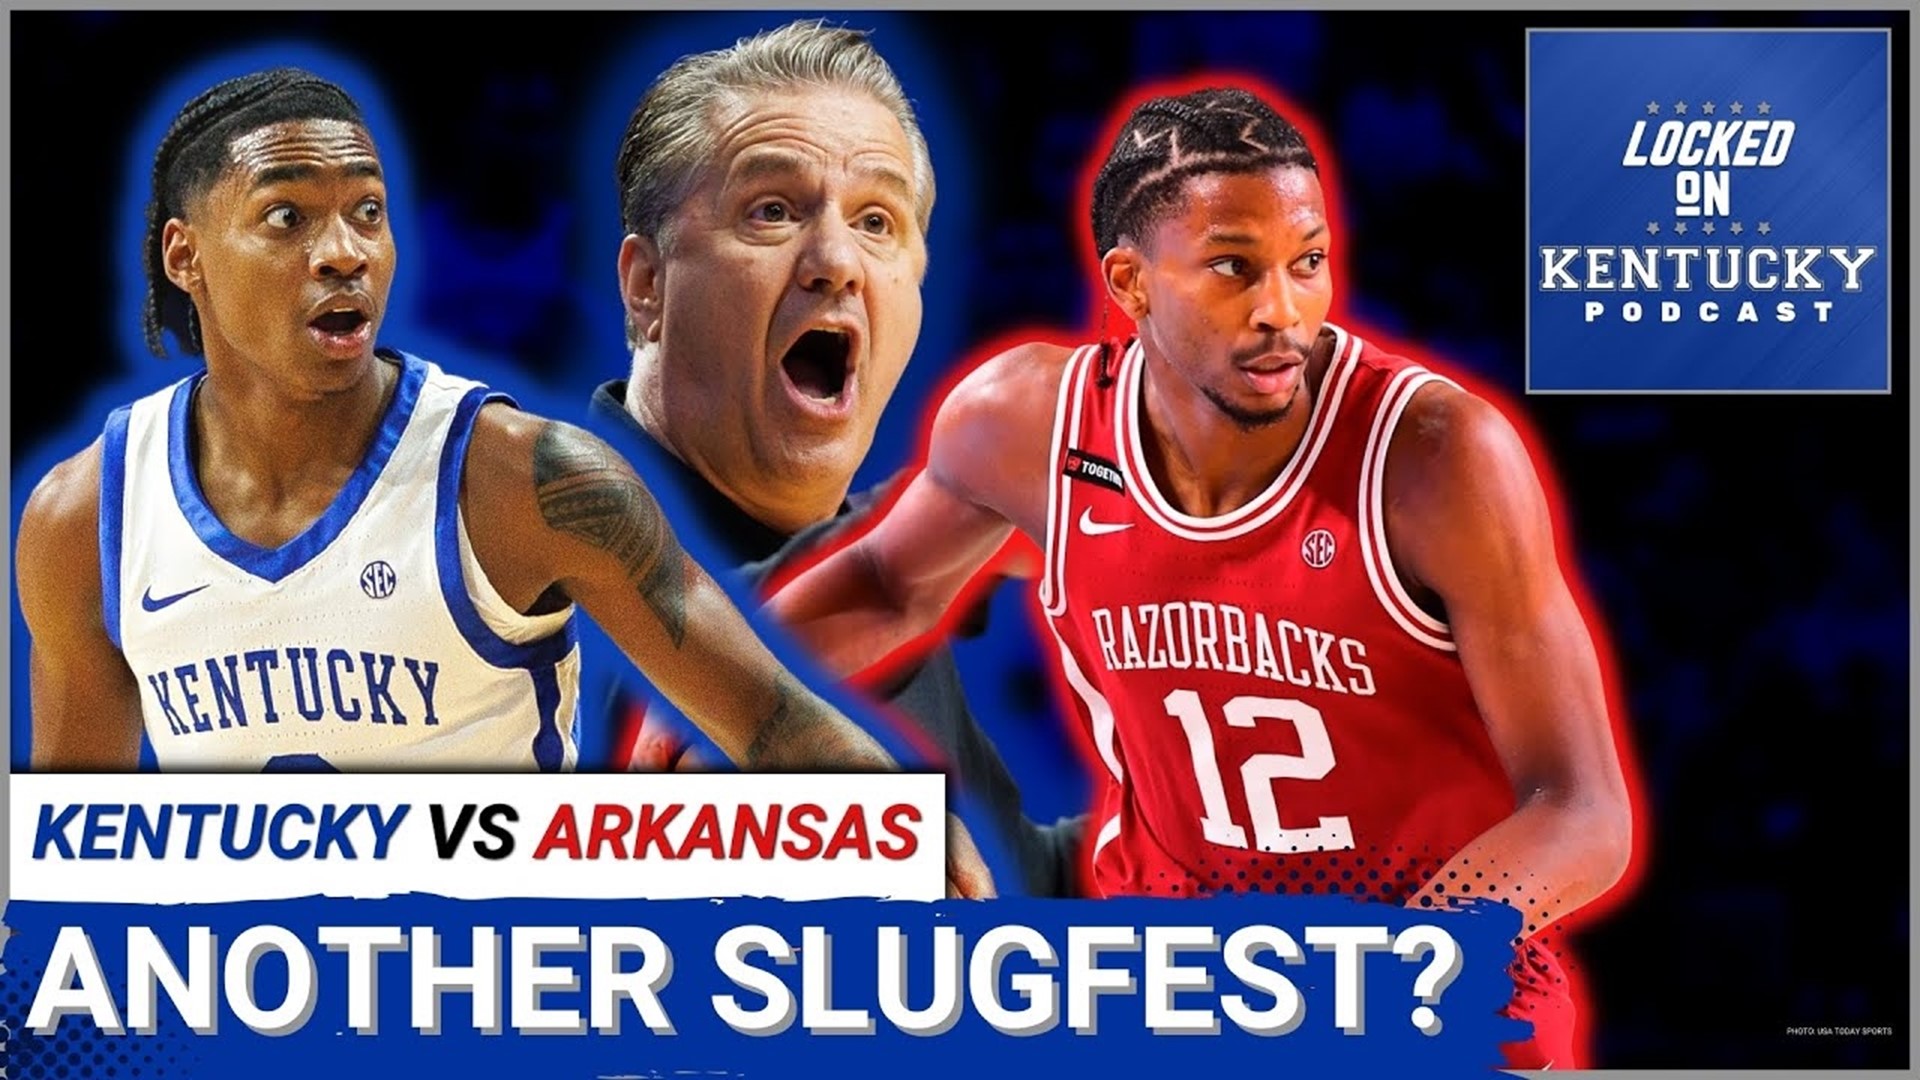 Kentucky vs Arkansas basketball preview Another slugfest for UK